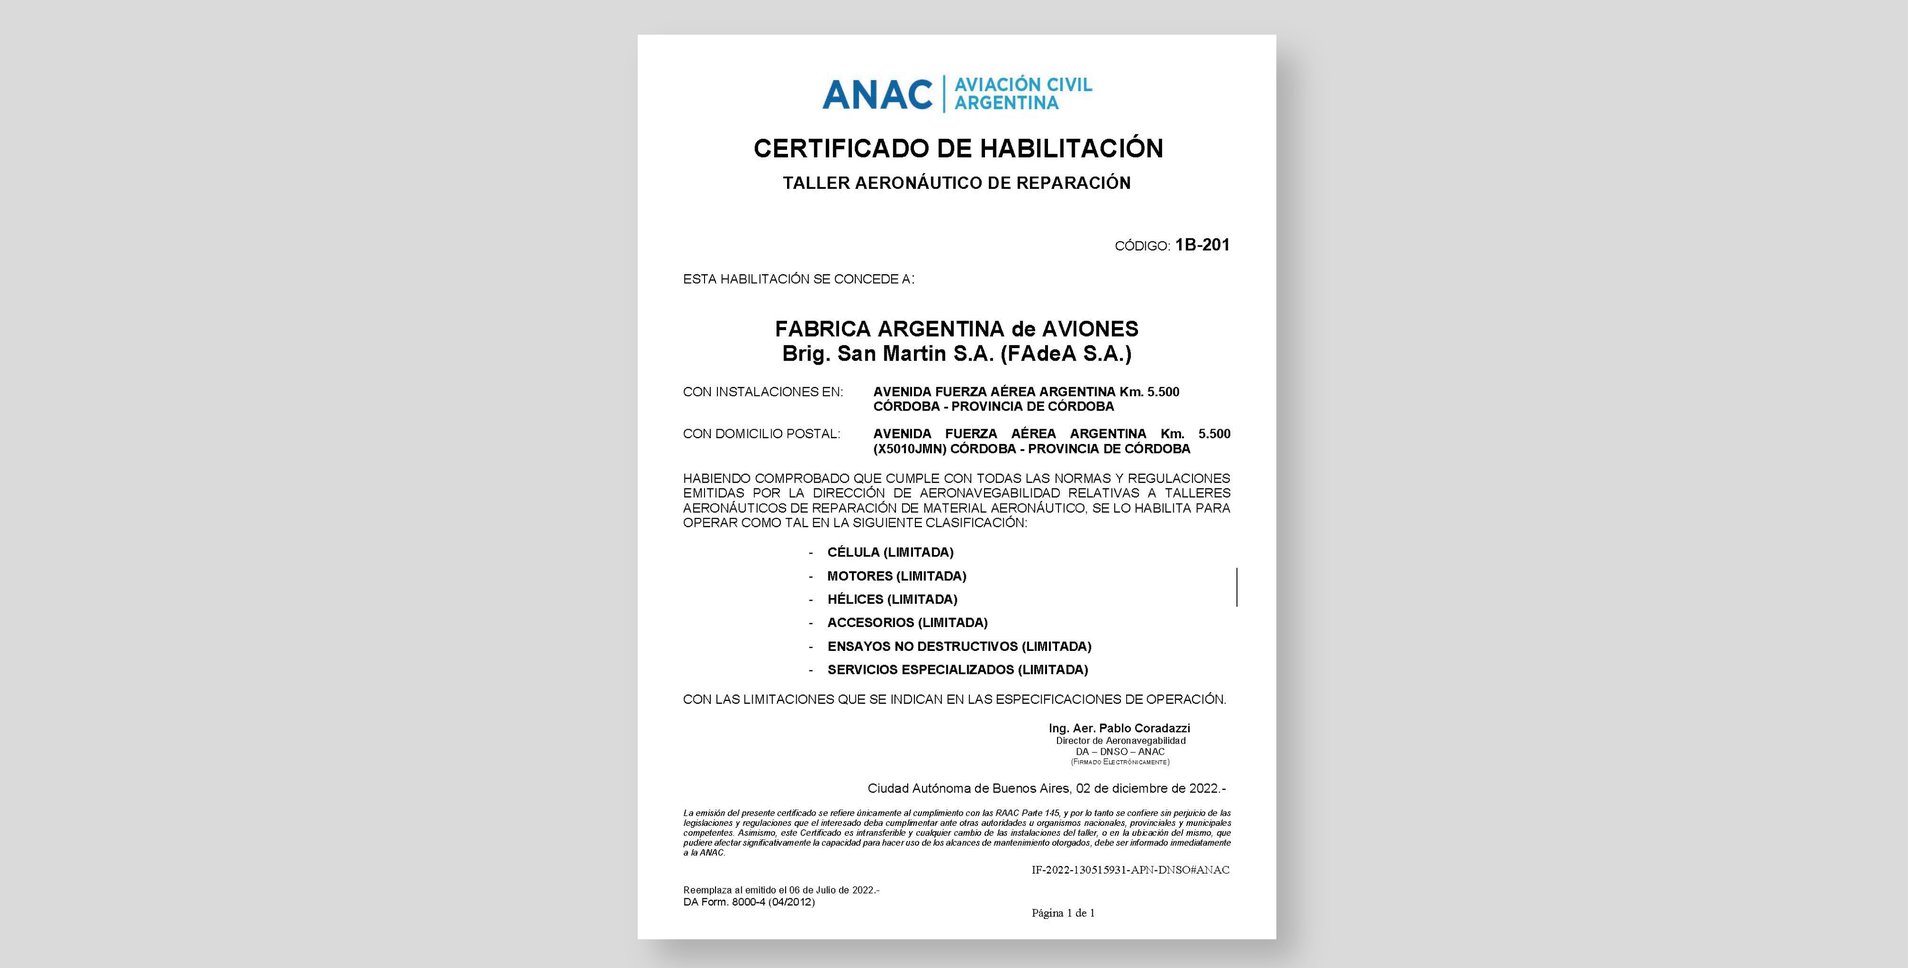 ANAC - Certificate of Approval Workshop 1B-201